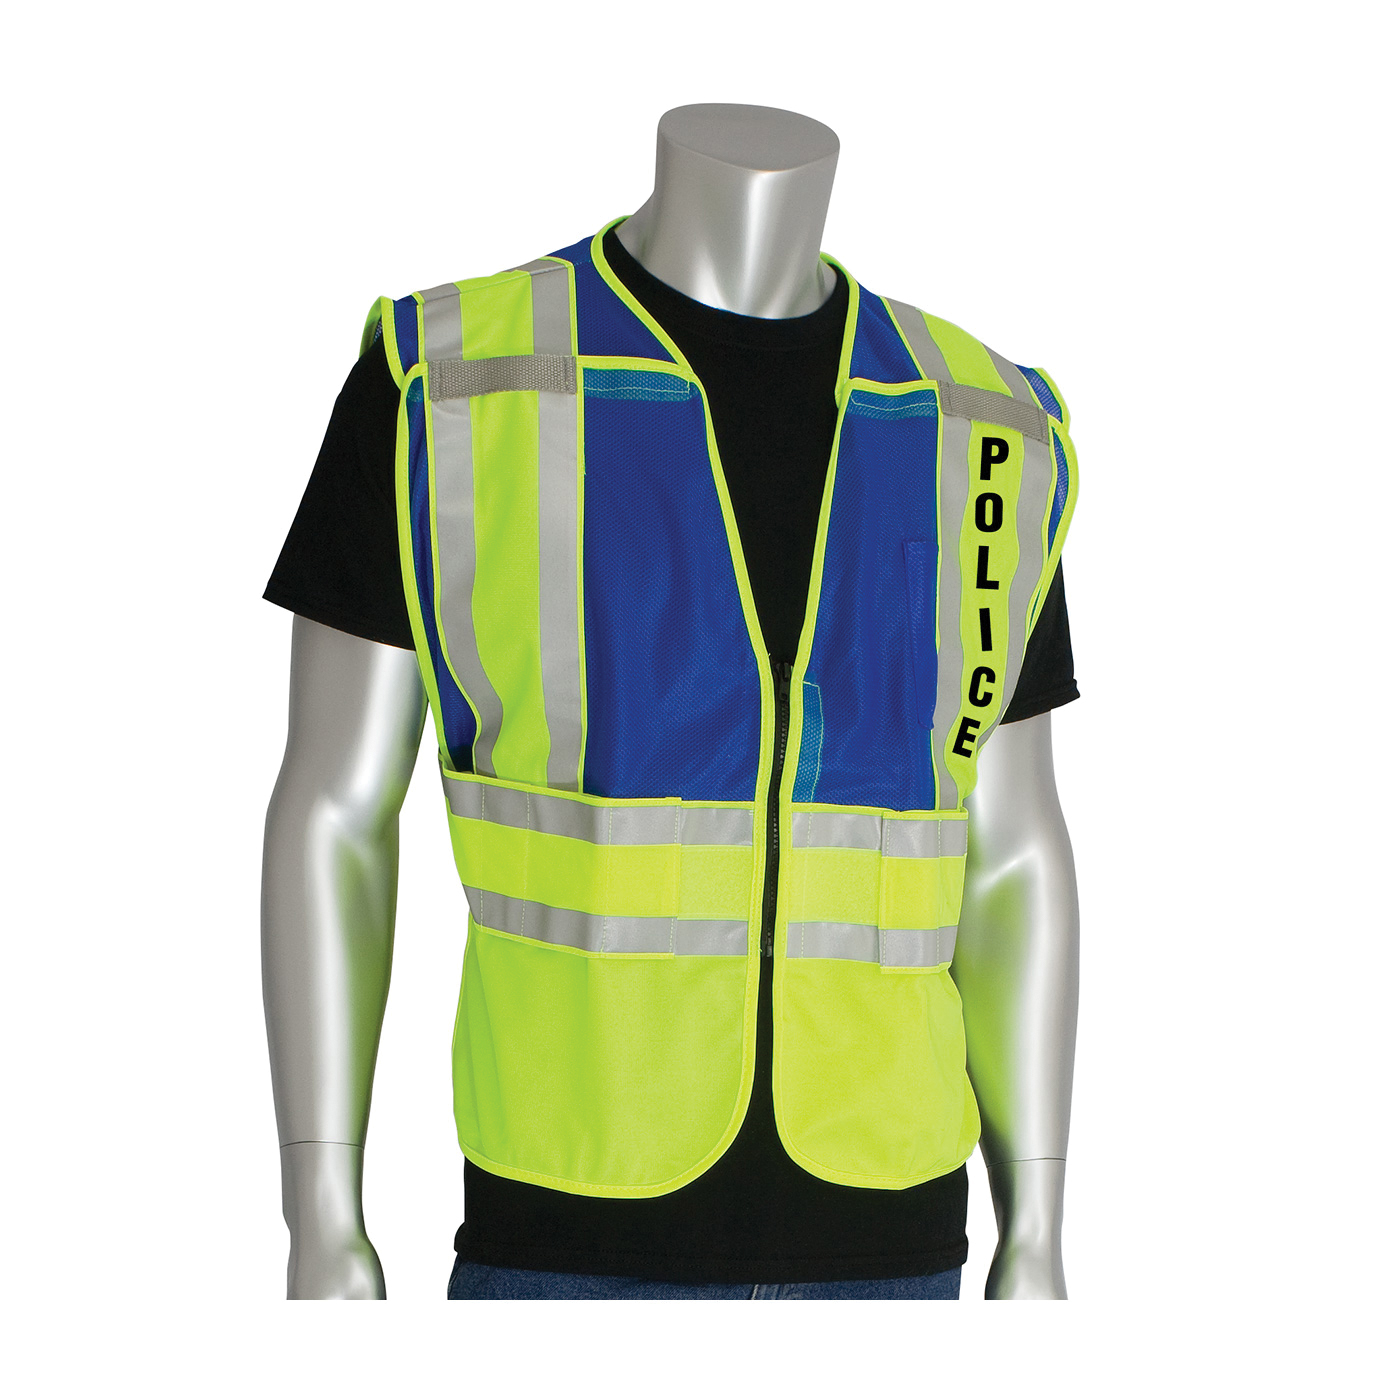 PIP® 302-PSV-BLU-2X/5X Public Safety Vest With POLICE Logo, 2XL/5XL, Hi-Viz Lime Yellow/Blue, Polyester, Zipper Closure, 2 Pockets, ANSI Class: Class 2, Specifications Met: ANSI 107 Type P